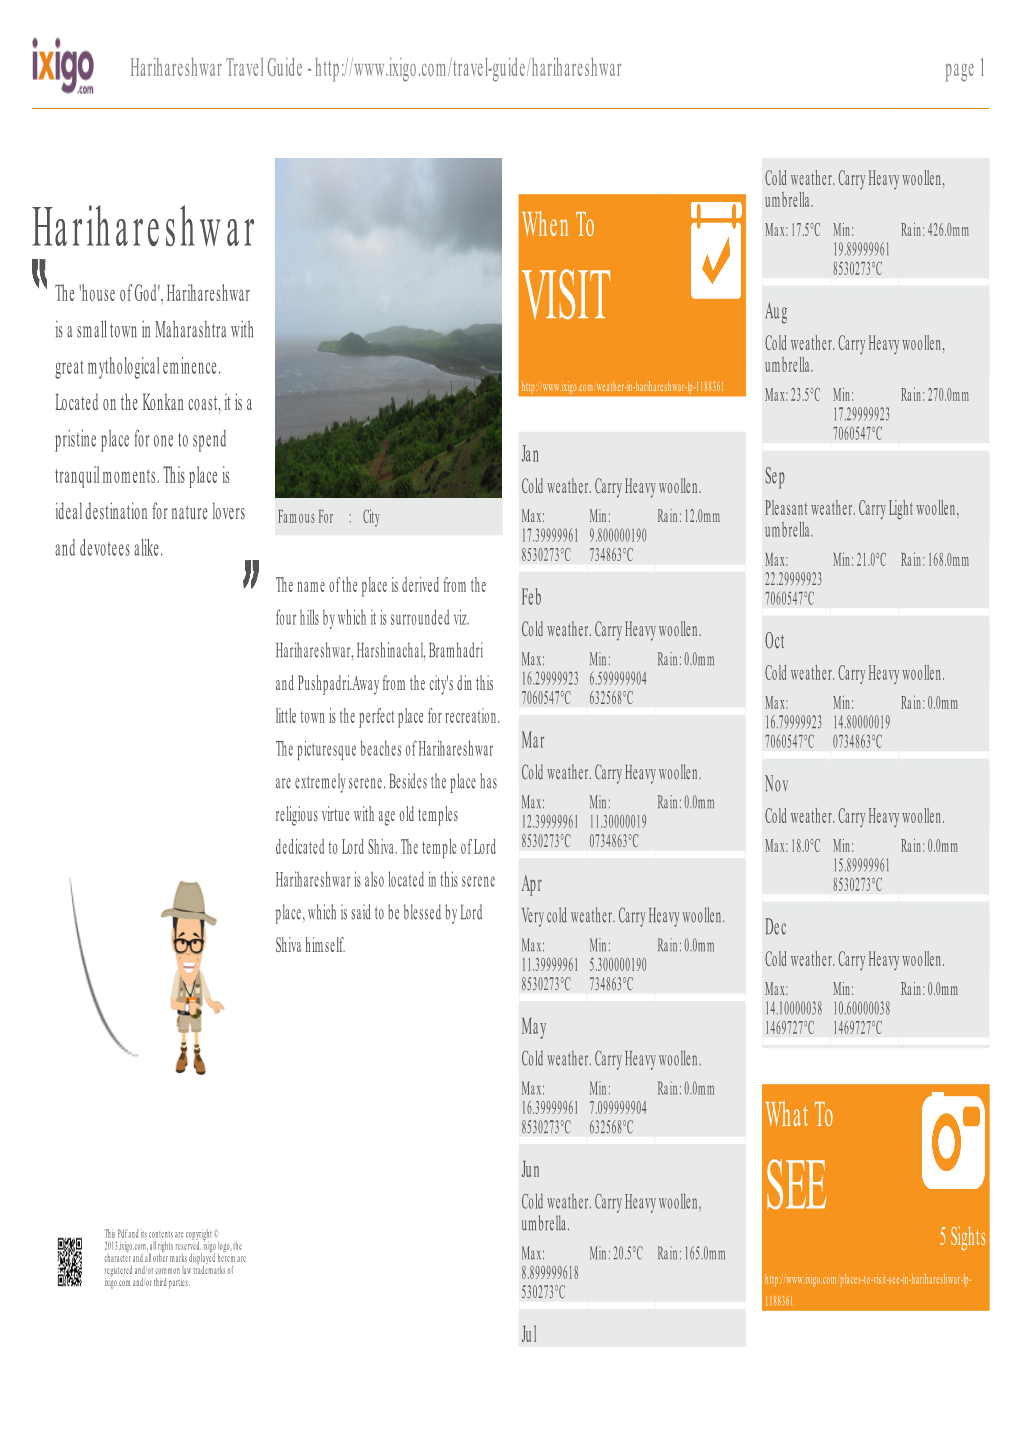 Harihareshwar Travel Guide - Page 1